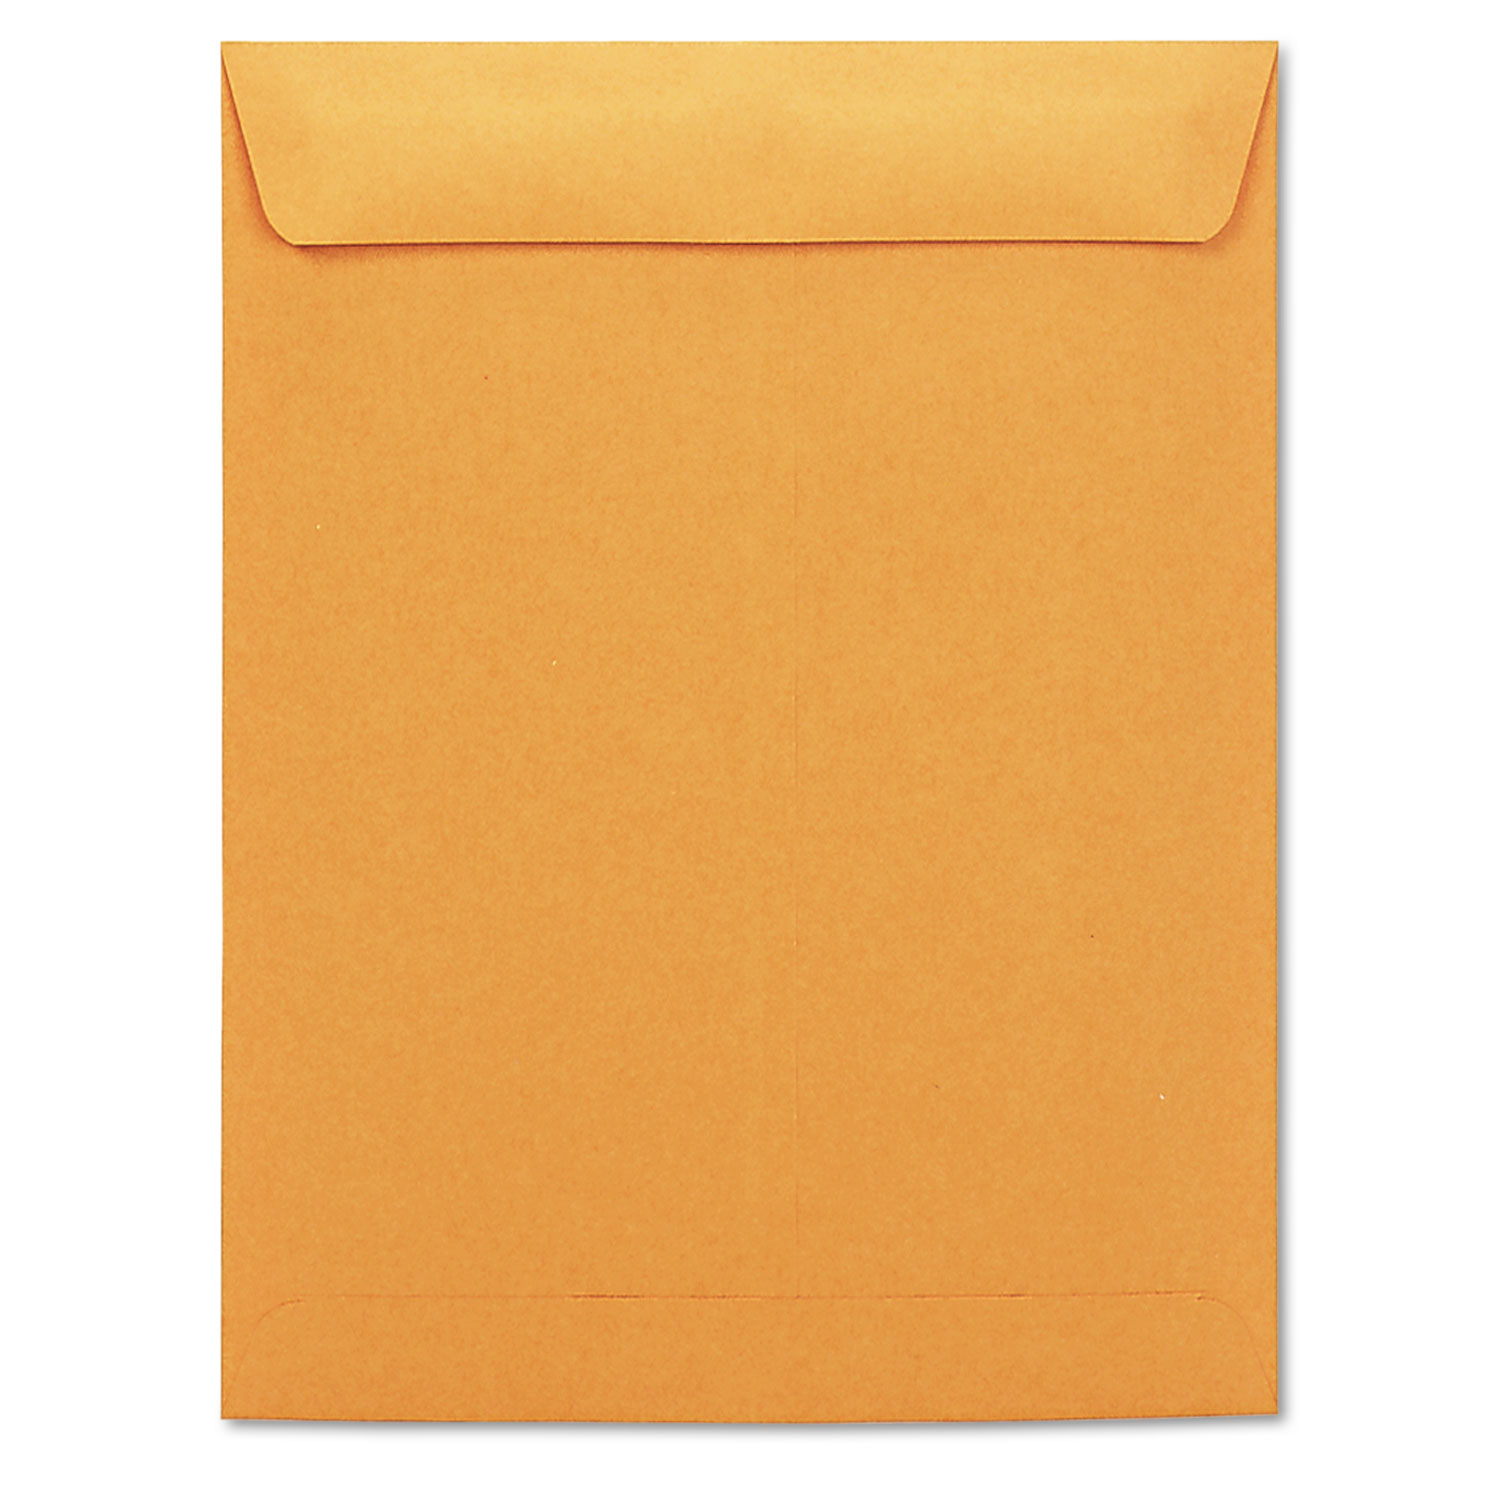  Universal UNV44105 Catalog Envelope, #13 1/2, Square Flap, Gummed Closure, 10 x 13, Brown Kraft, 250/Box (UNV44105) 